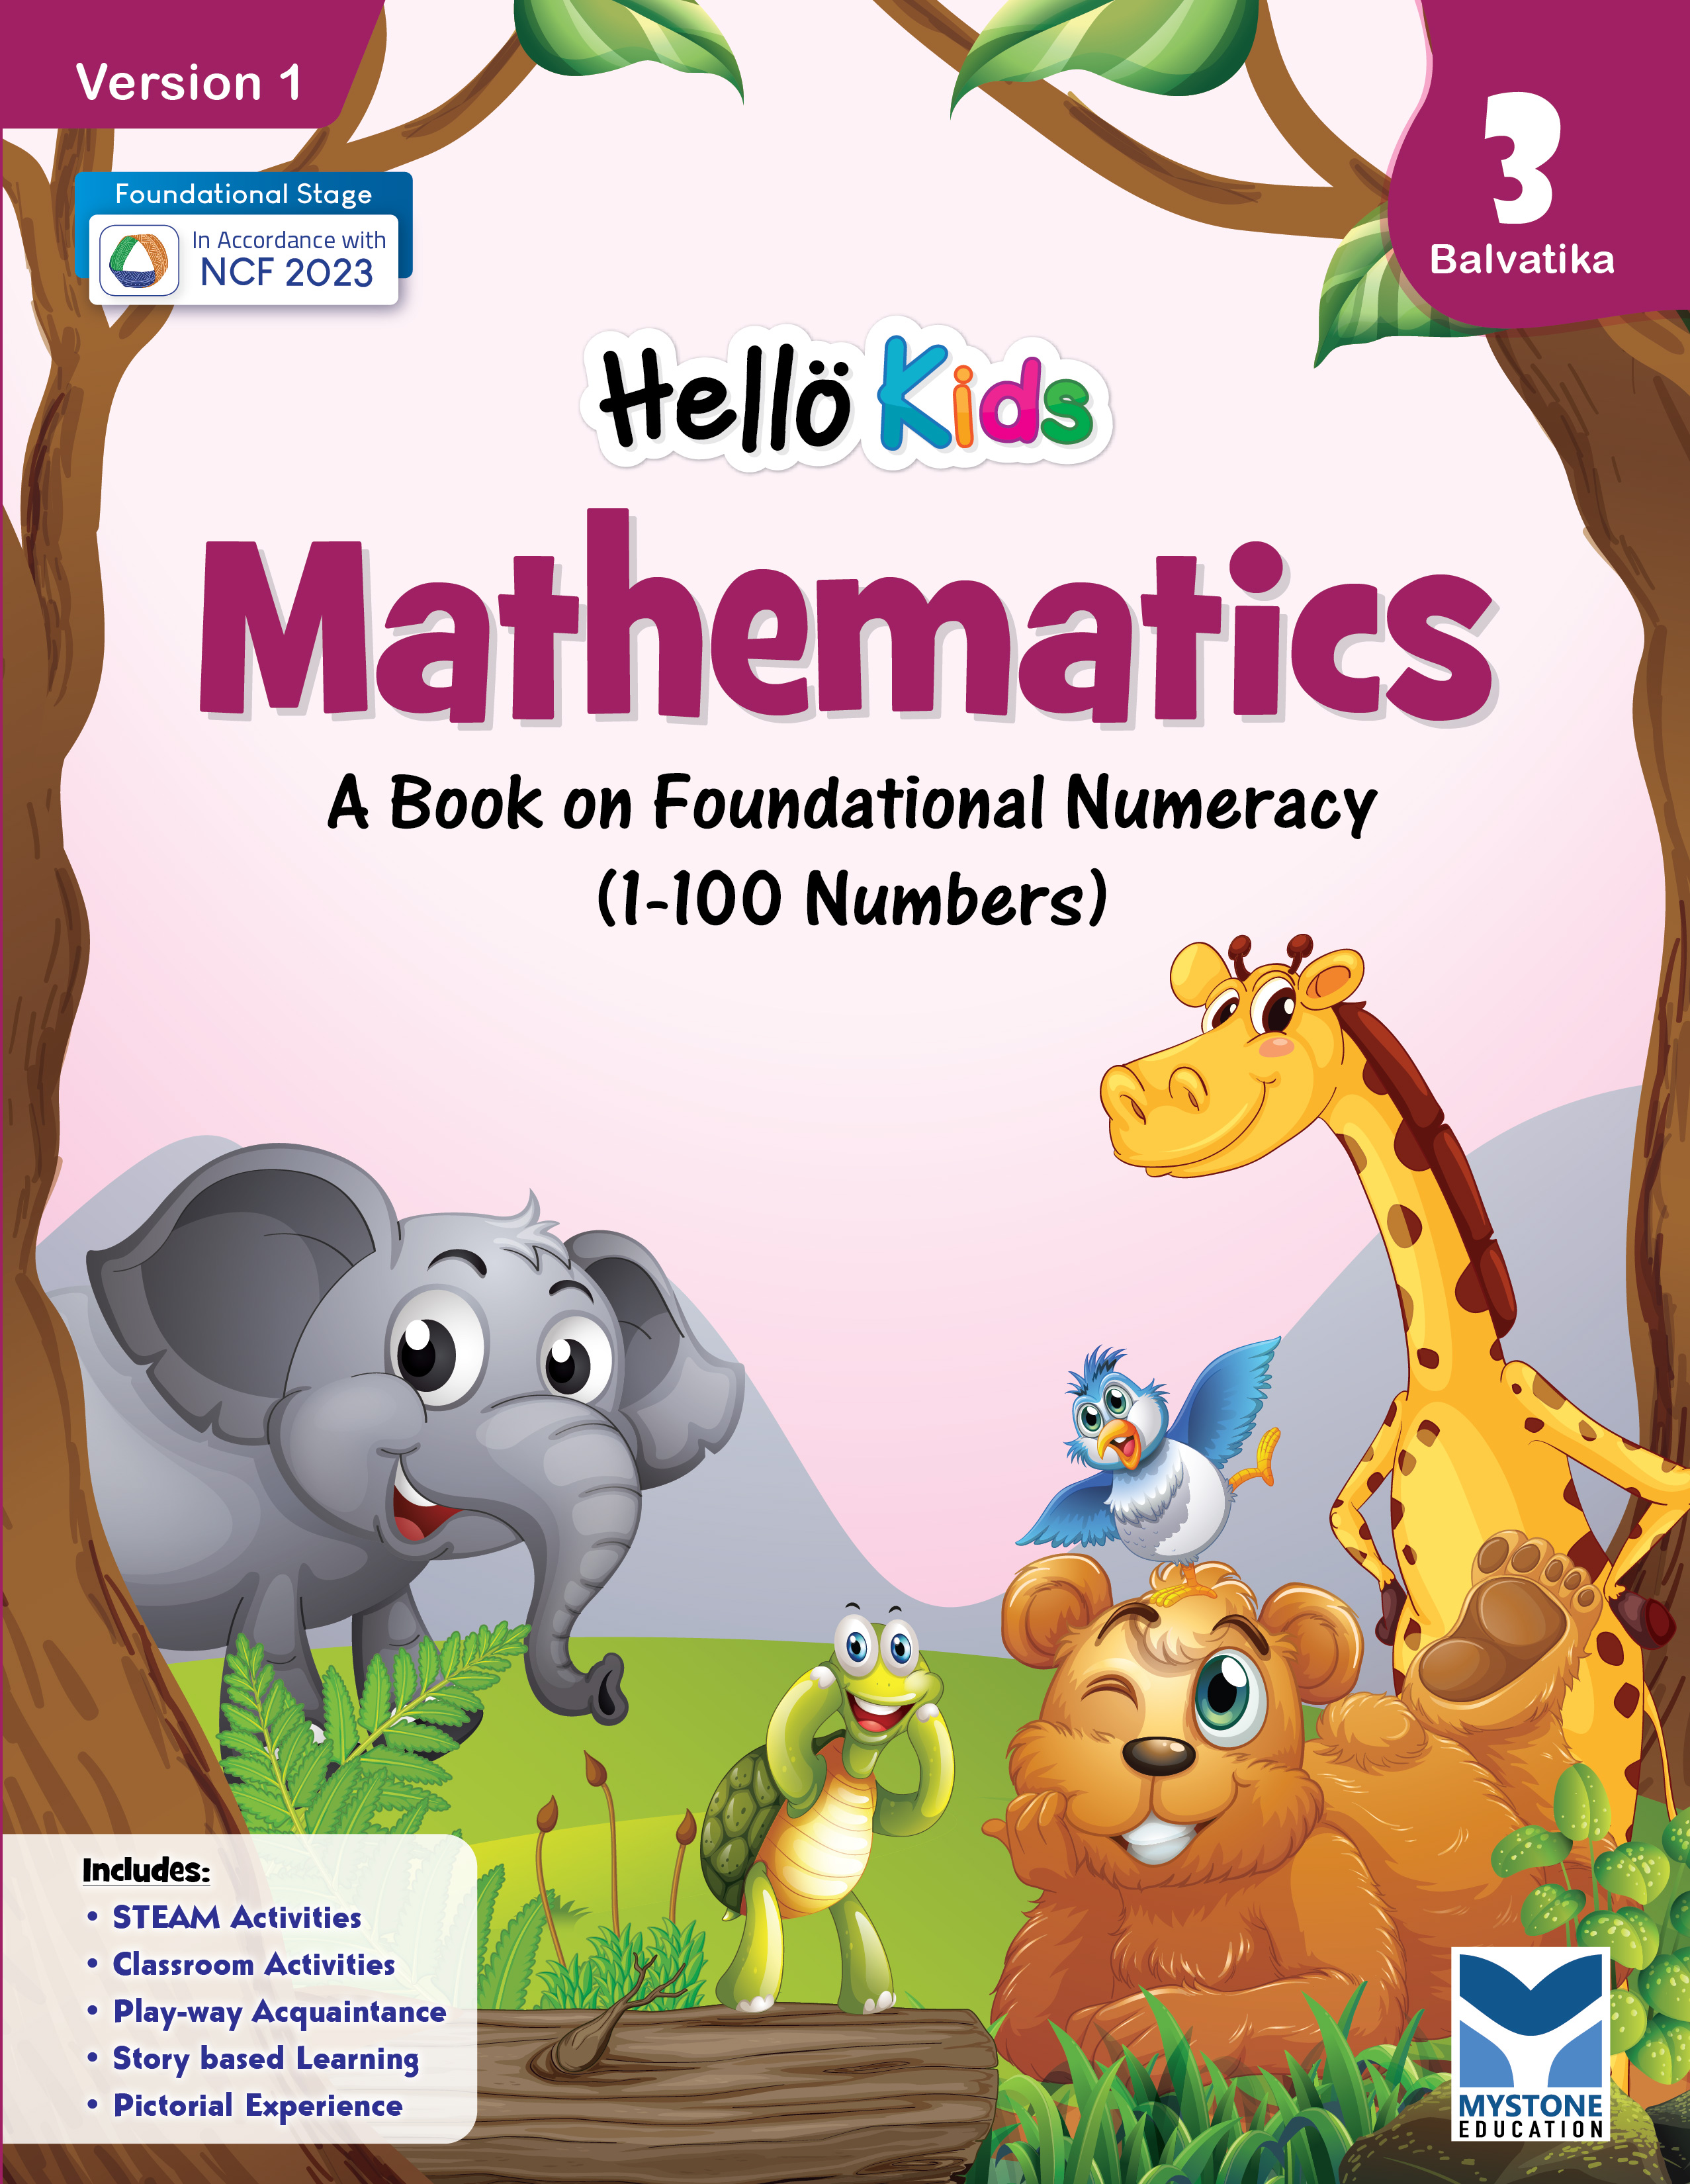 Hello Kids Mathematics Balvatika 3 Ver. 1